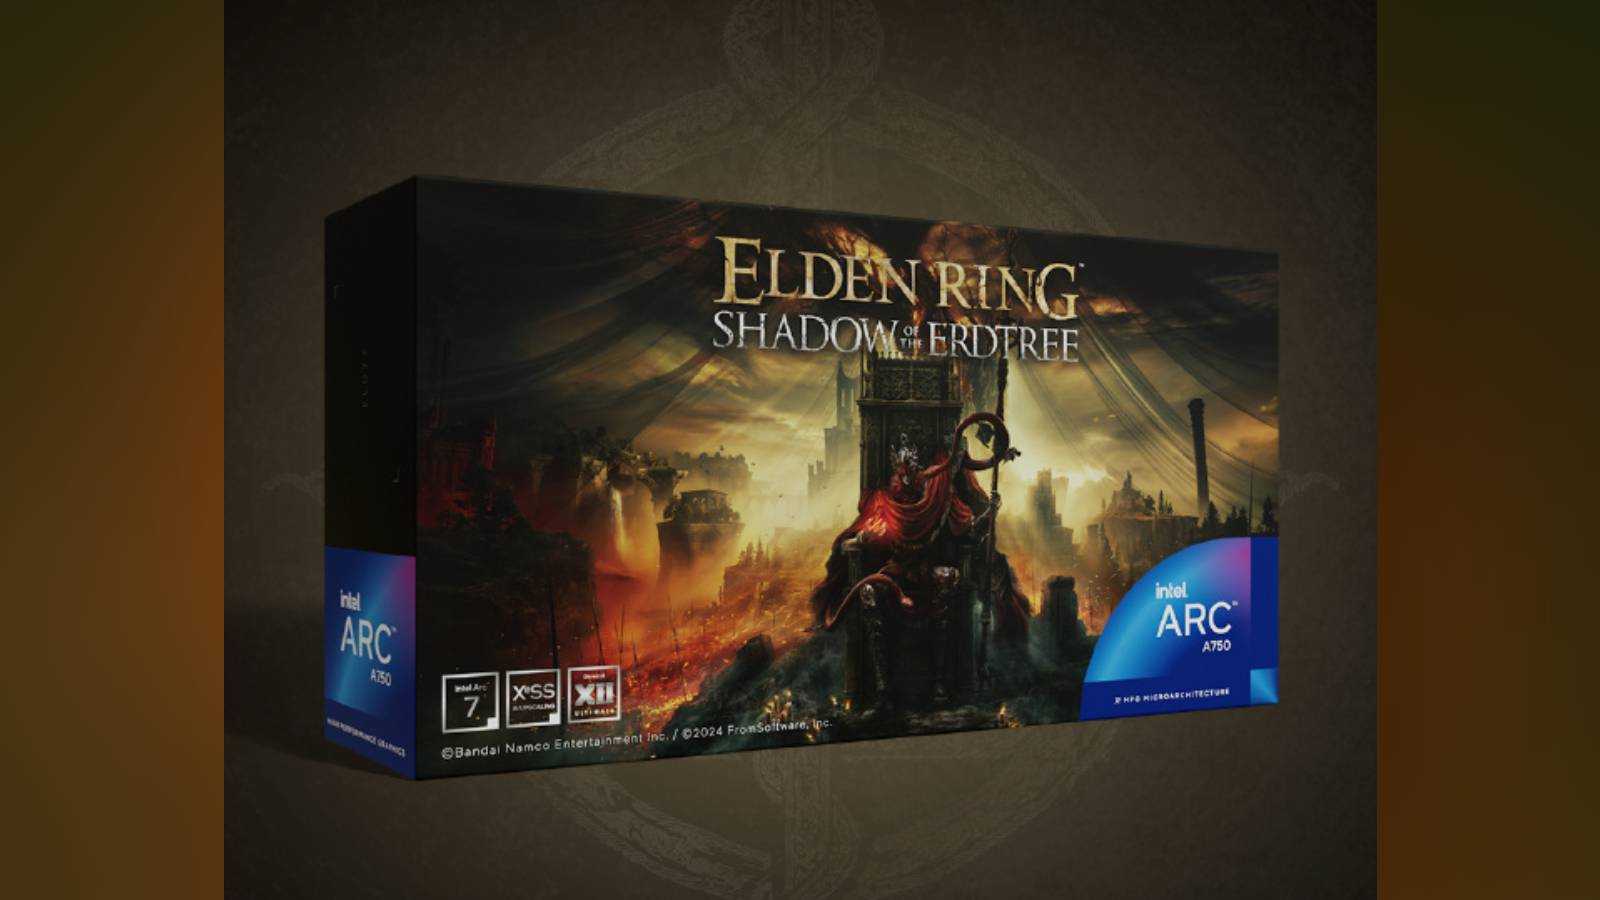 Image of the Gunnir official Elden Ring graphics card.